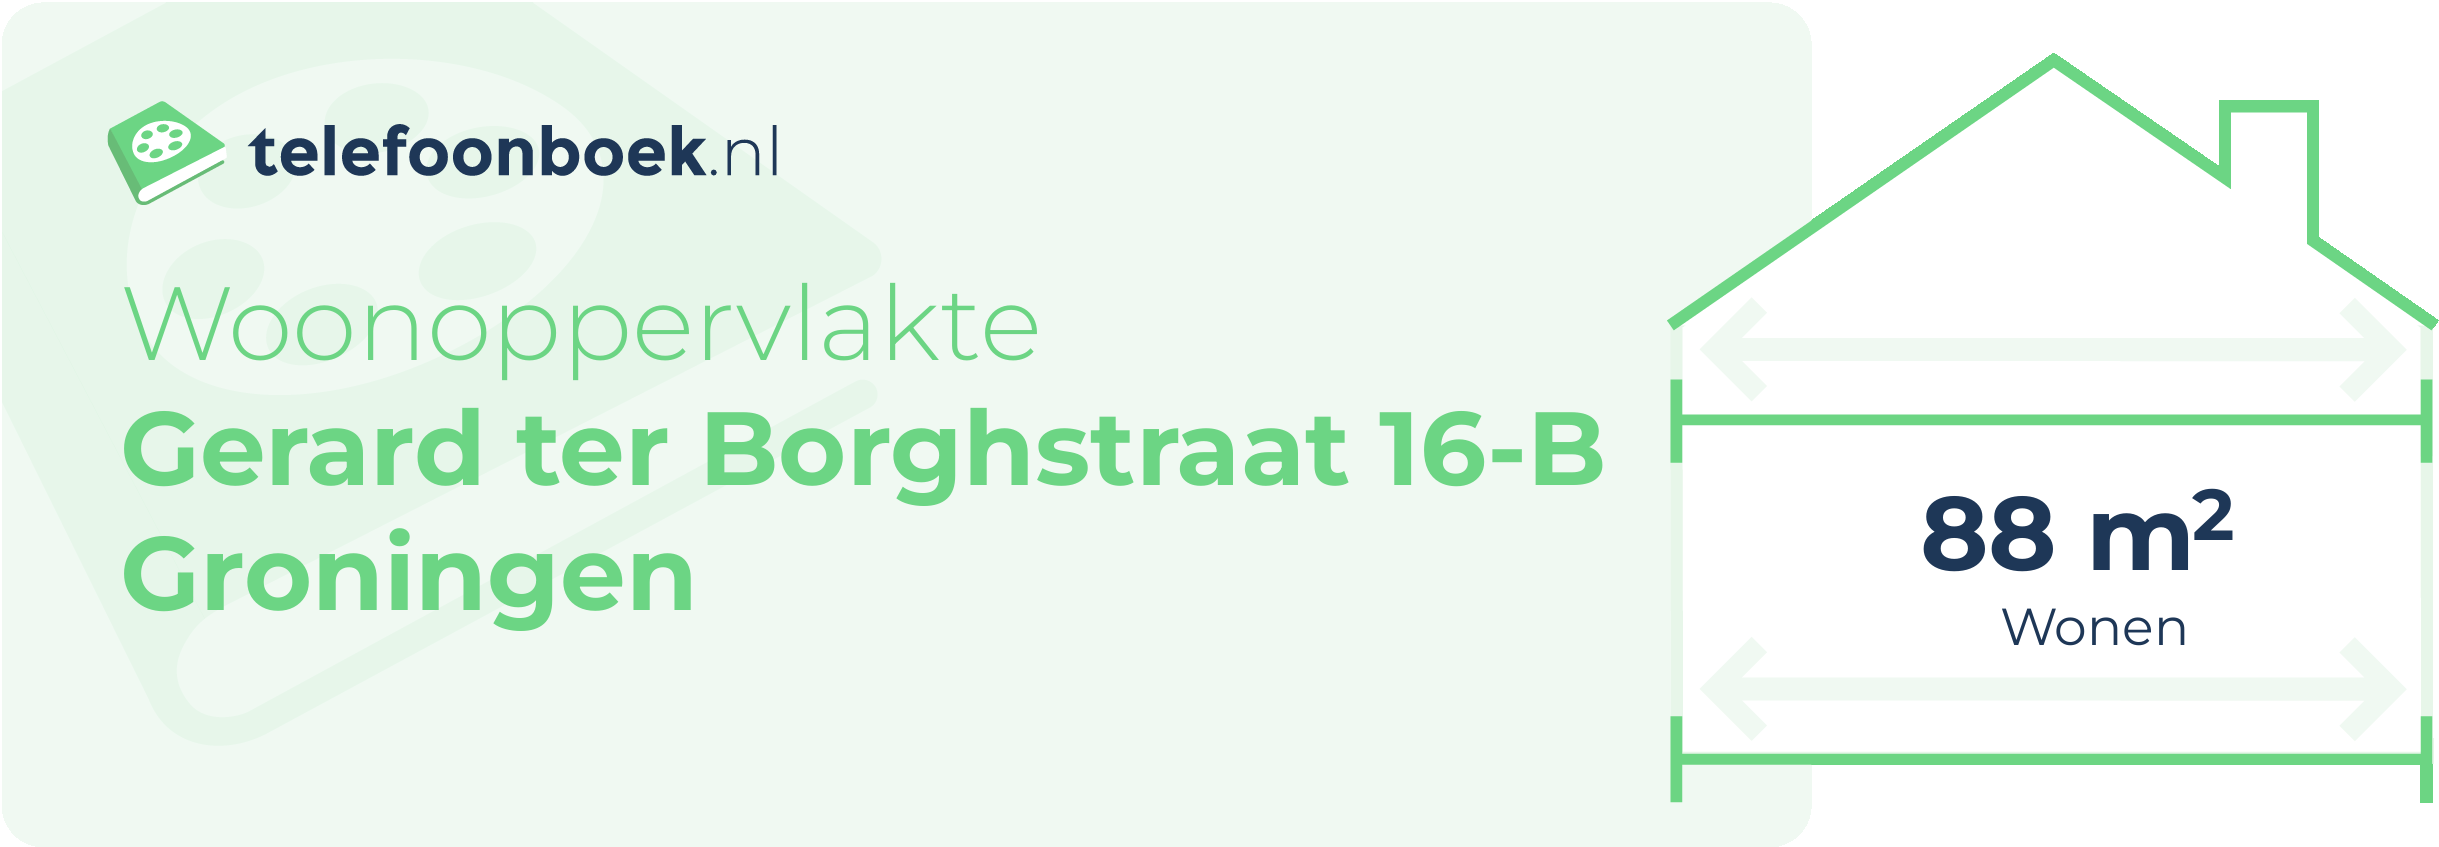 Woonoppervlakte Gerard Ter Borghstraat 16-B Groningen